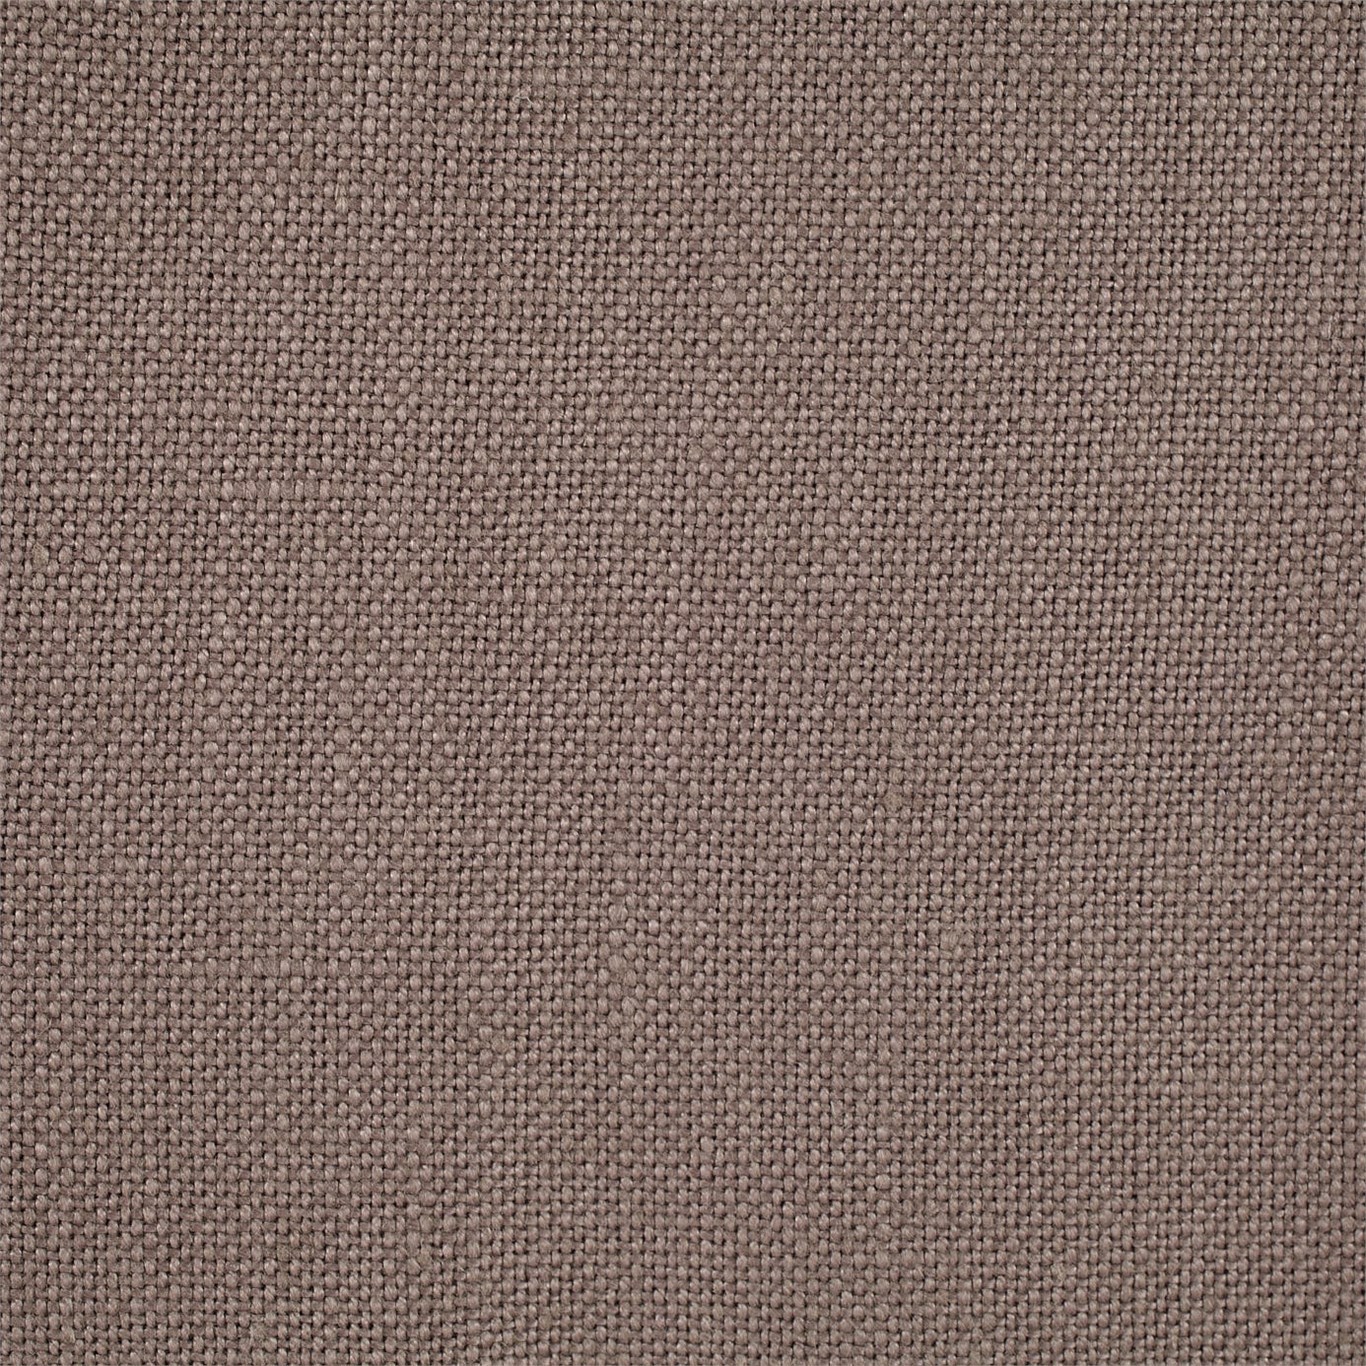 Malbec Stone Fabric by SAN